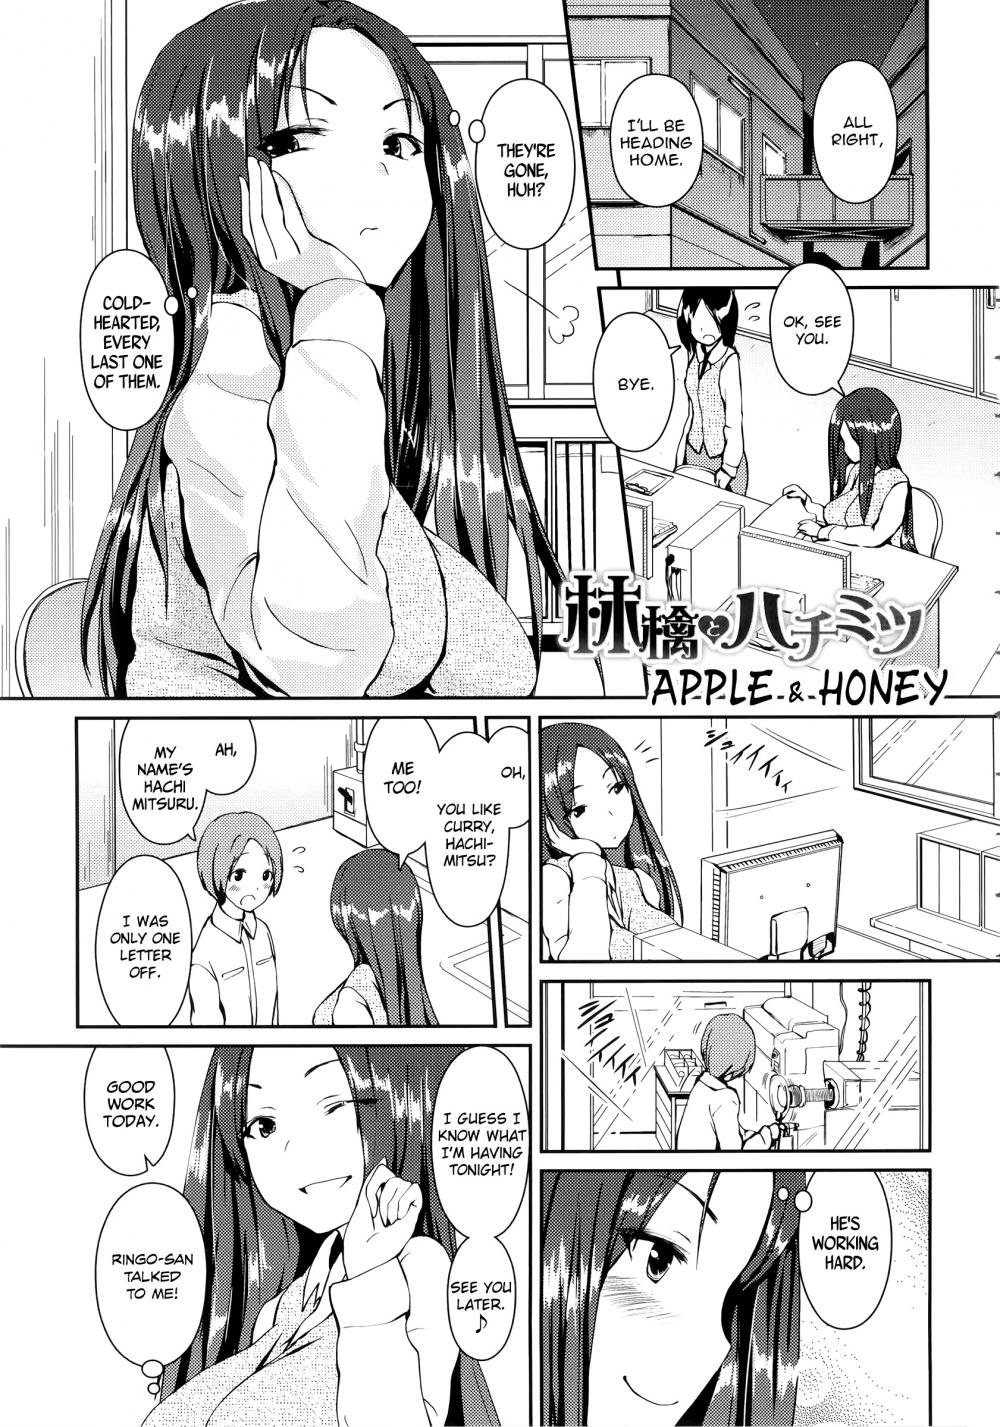 Hentai Manga Comic-Papilla Heat Up-Chapter 2 - apple & honey-1